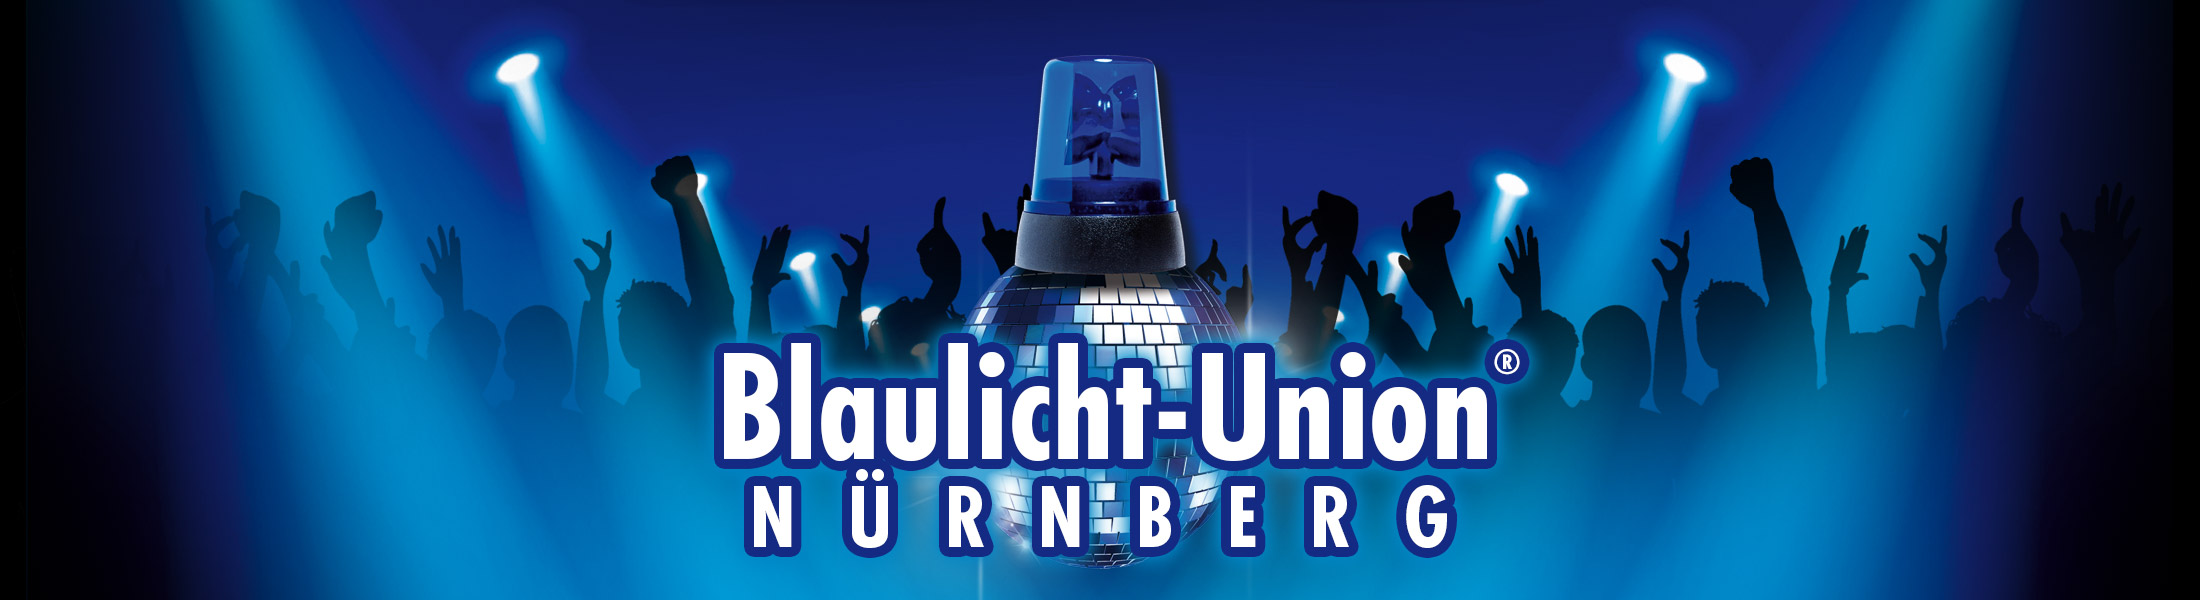 Blaulicht Union Party® Nürnberg